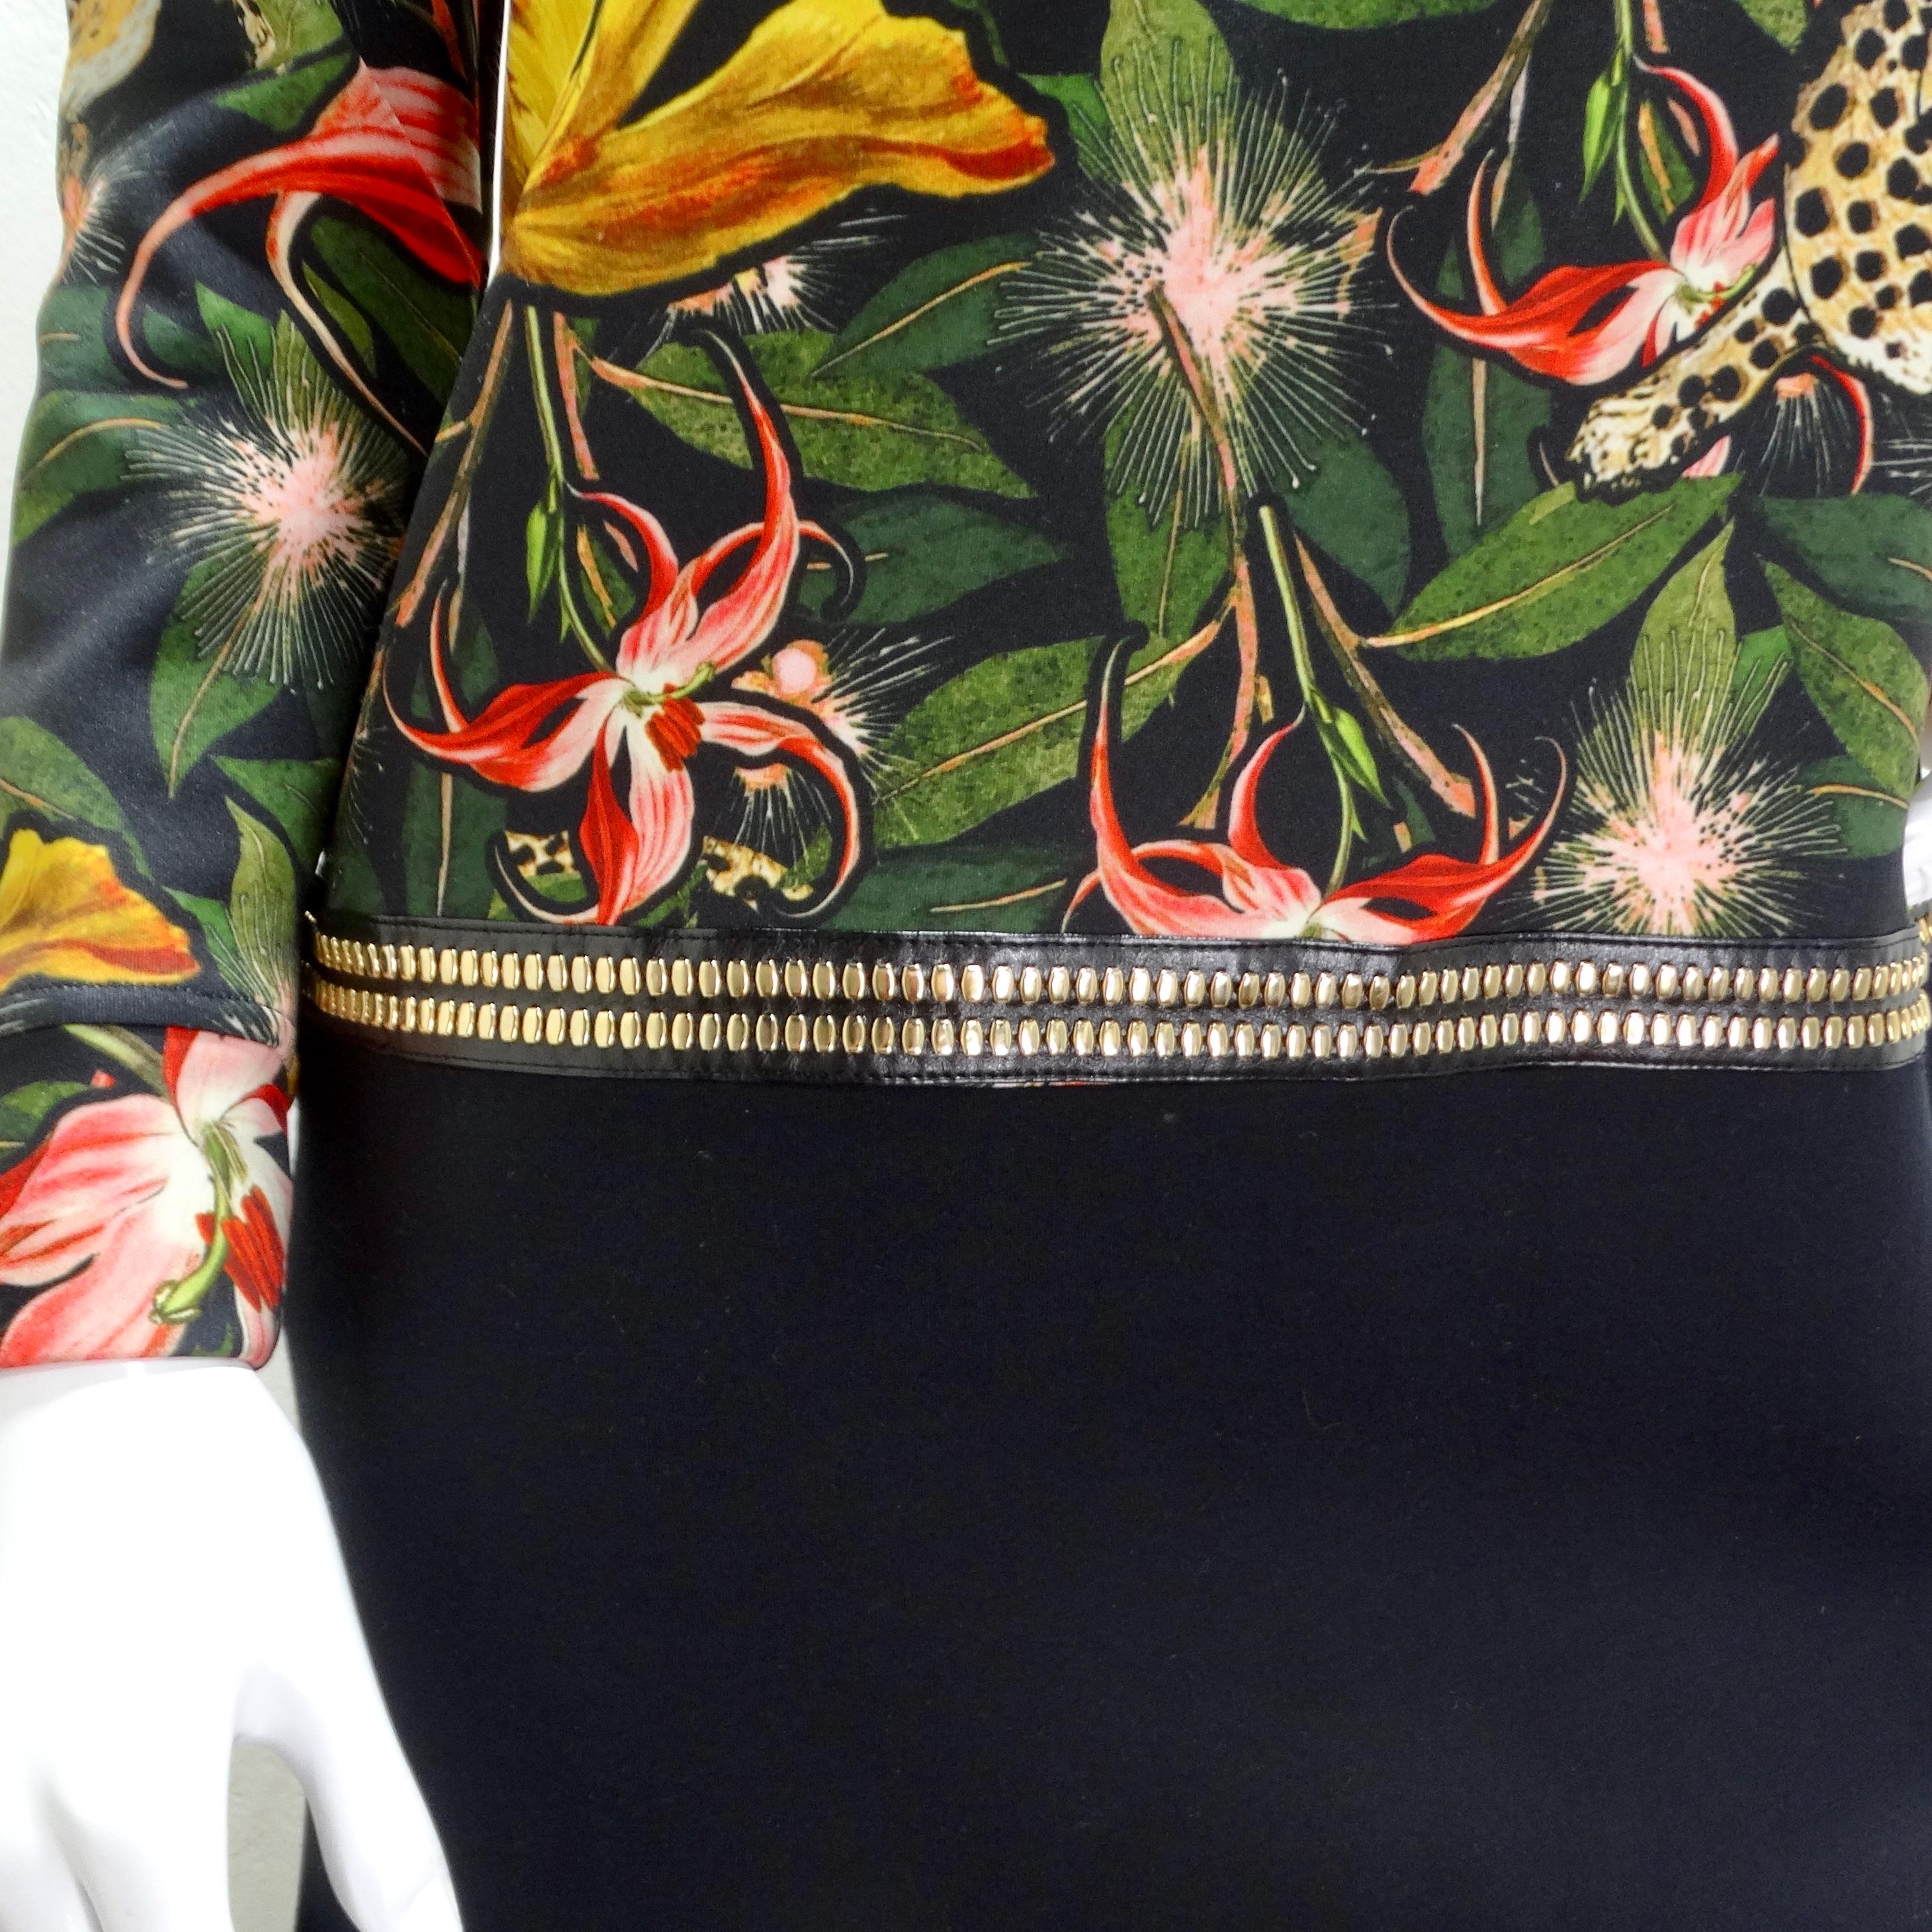 Roberto Cavalli Floral Drop Waist Dress In Excellent Condition For Sale In Scottsdale, AZ